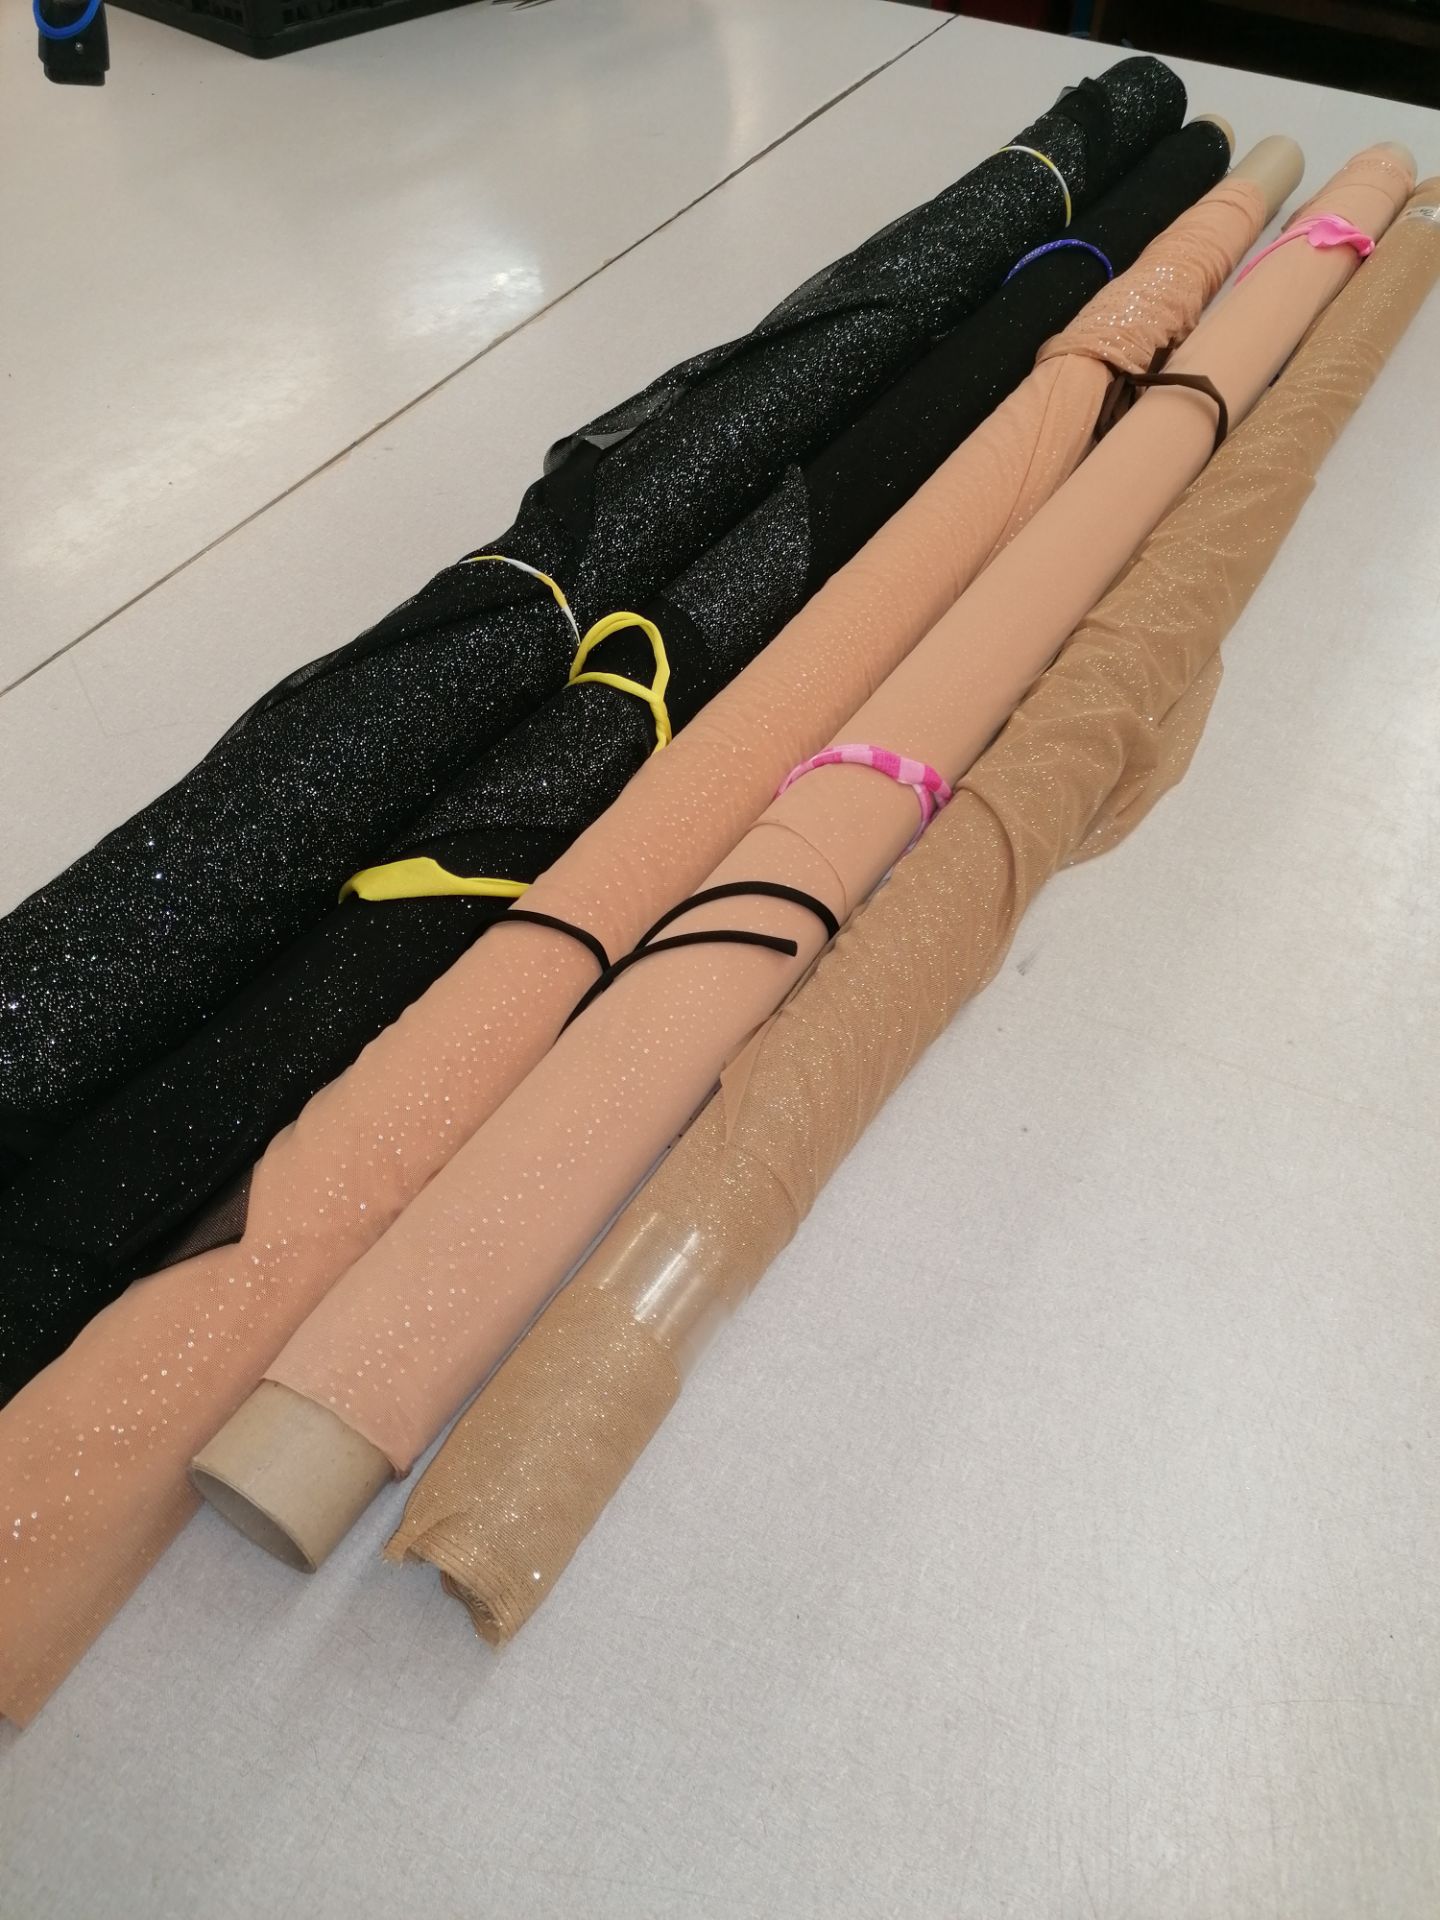 5 Rolls Dimanti Stretch net fabric Estimated 30m+ RRP £12-14 per meter - Image 2 of 5